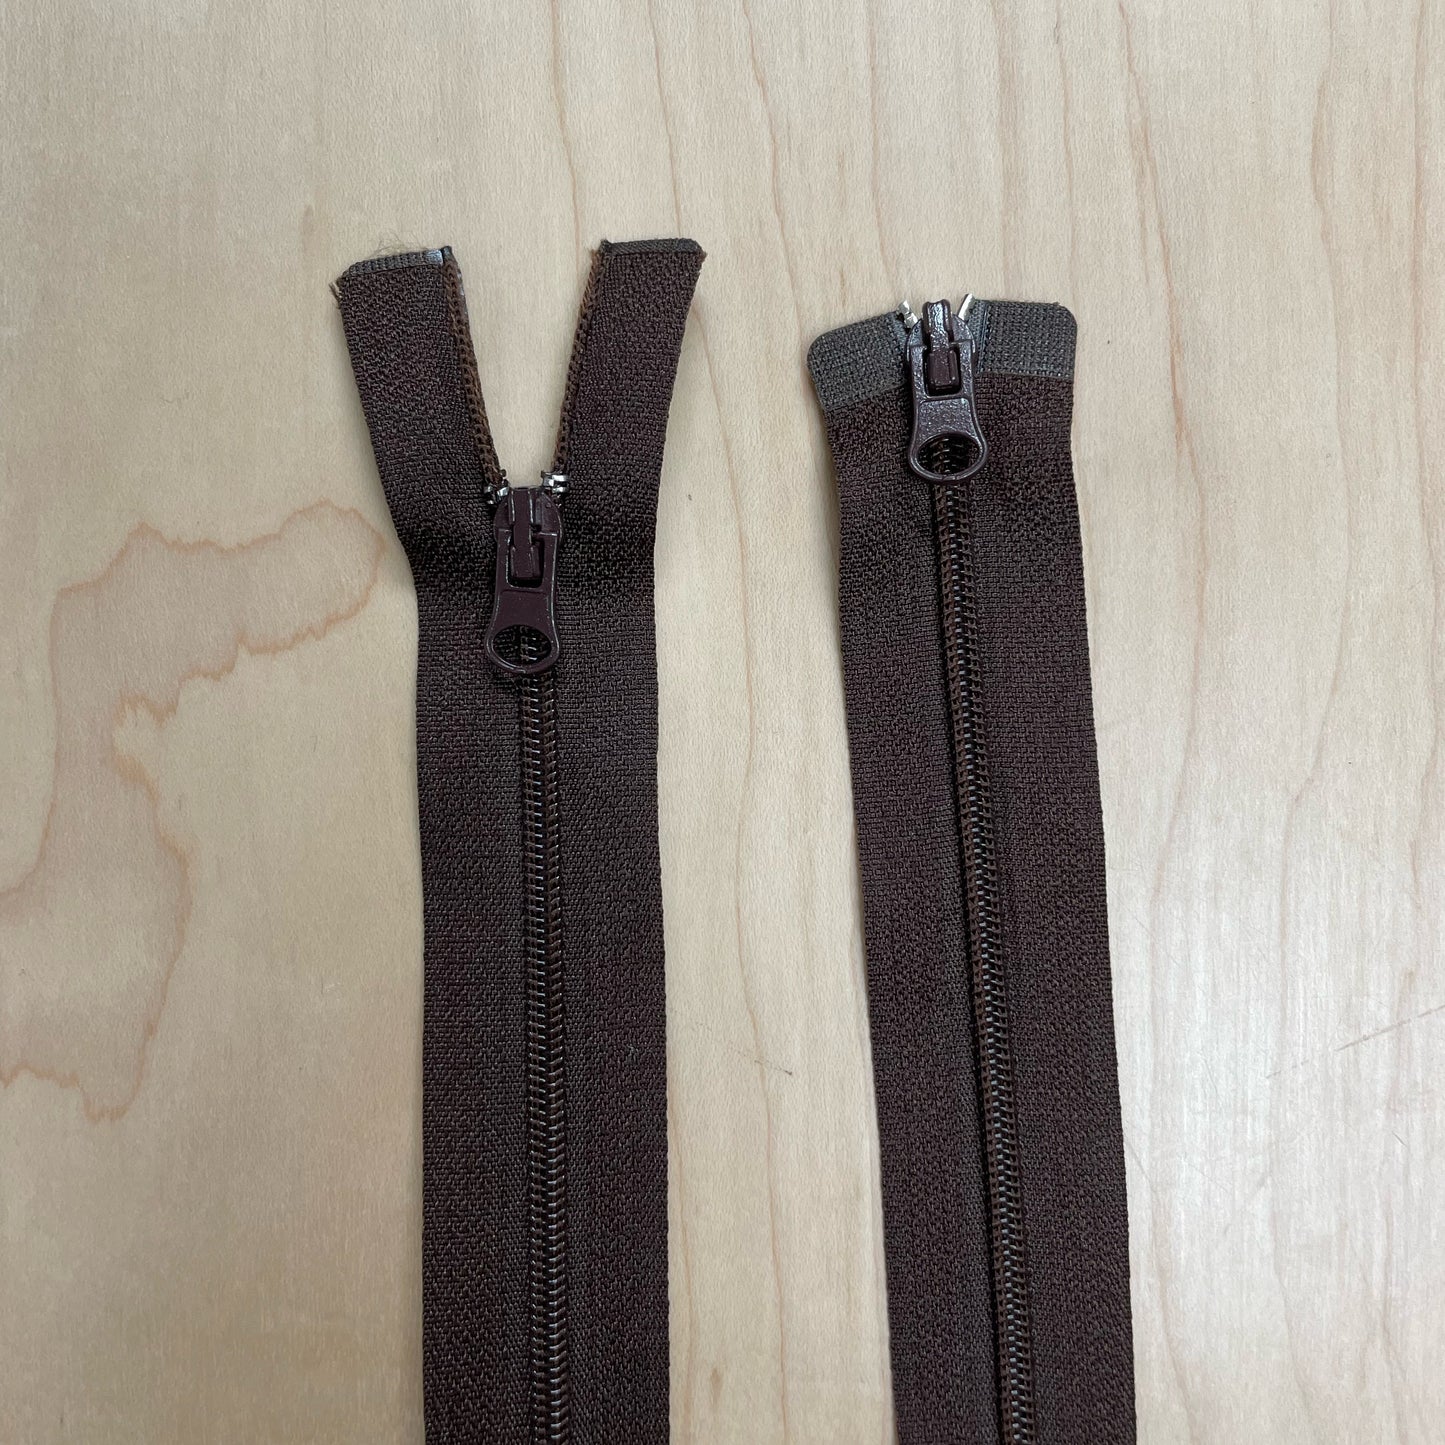 Two Way Separating Zipper - Light Weight #3 Nylon Coil 76cm (30") - Dark Brown